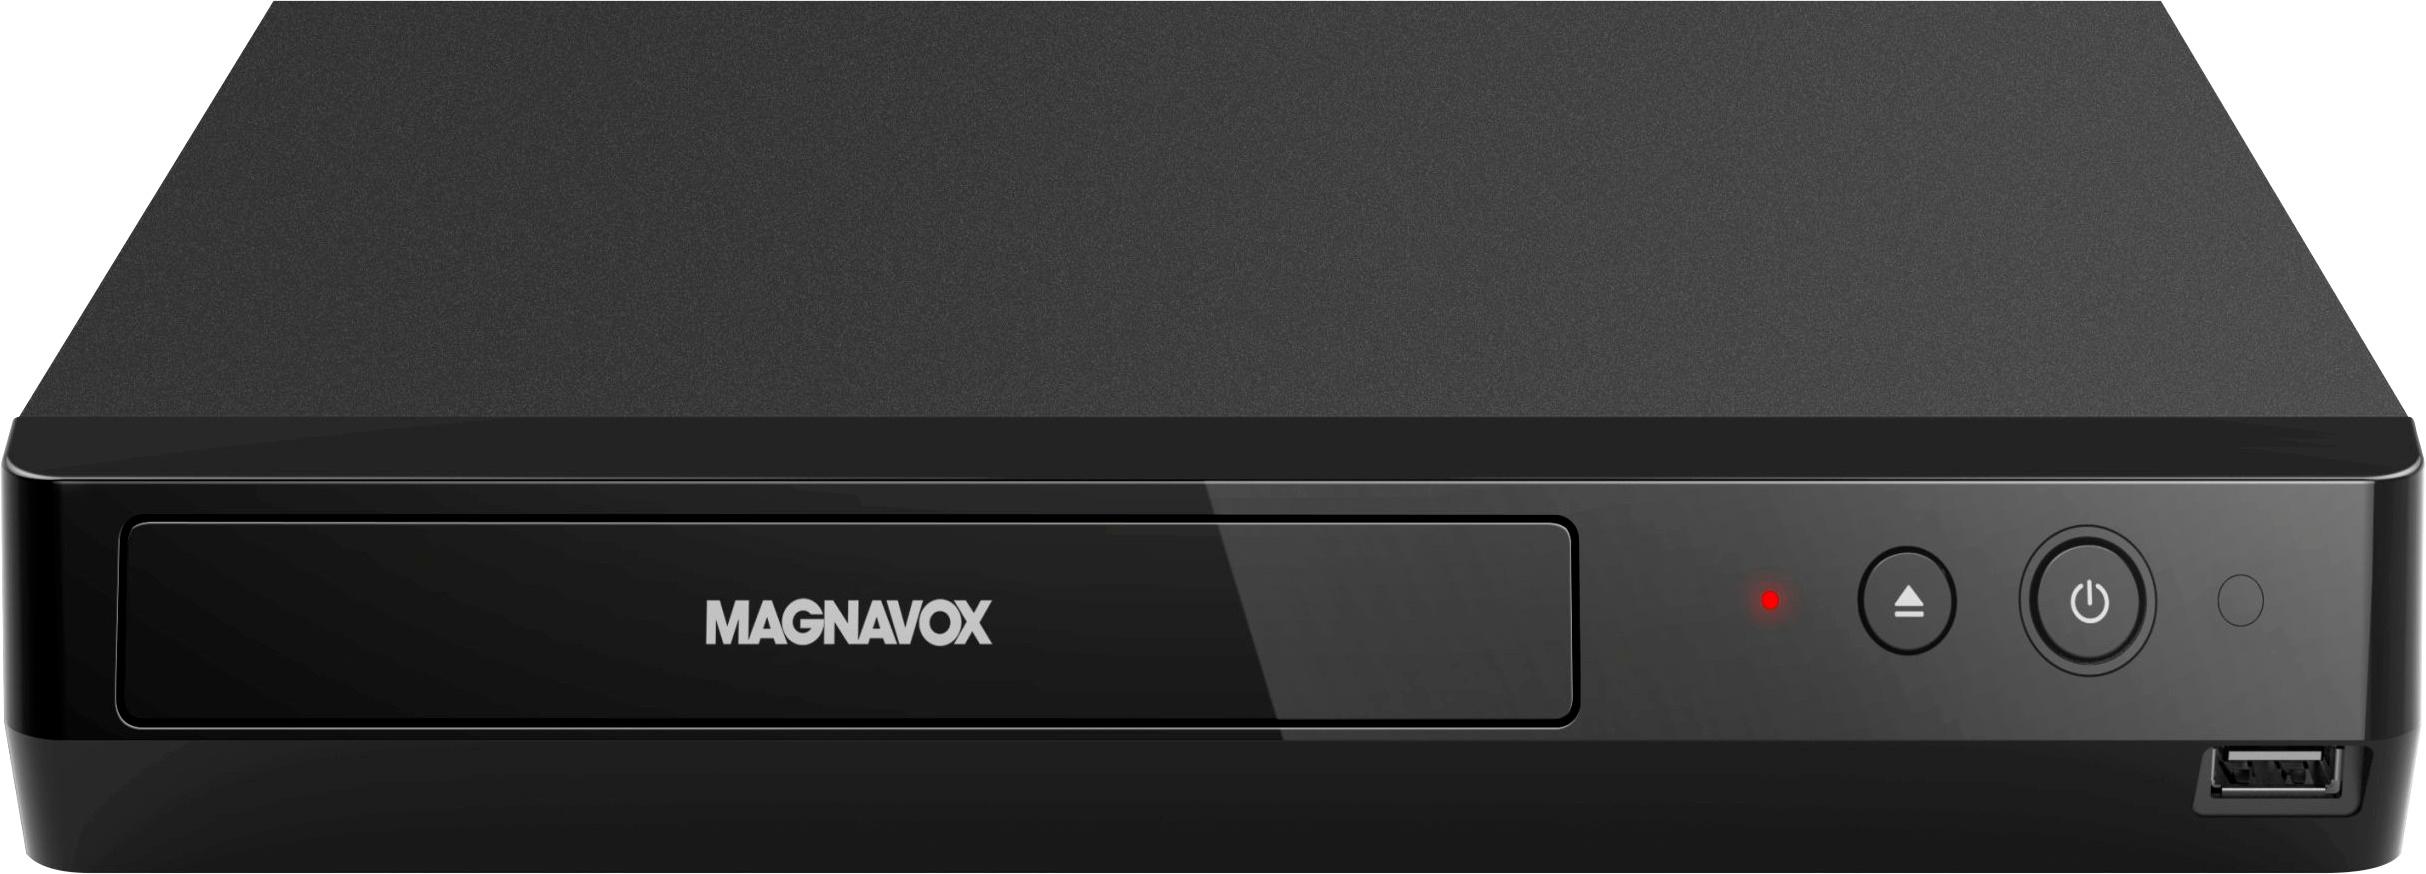 Best Buy: Magnavox MBP6700P 4K Ultra HD Blu-Ray Player Black MBP6700/F7